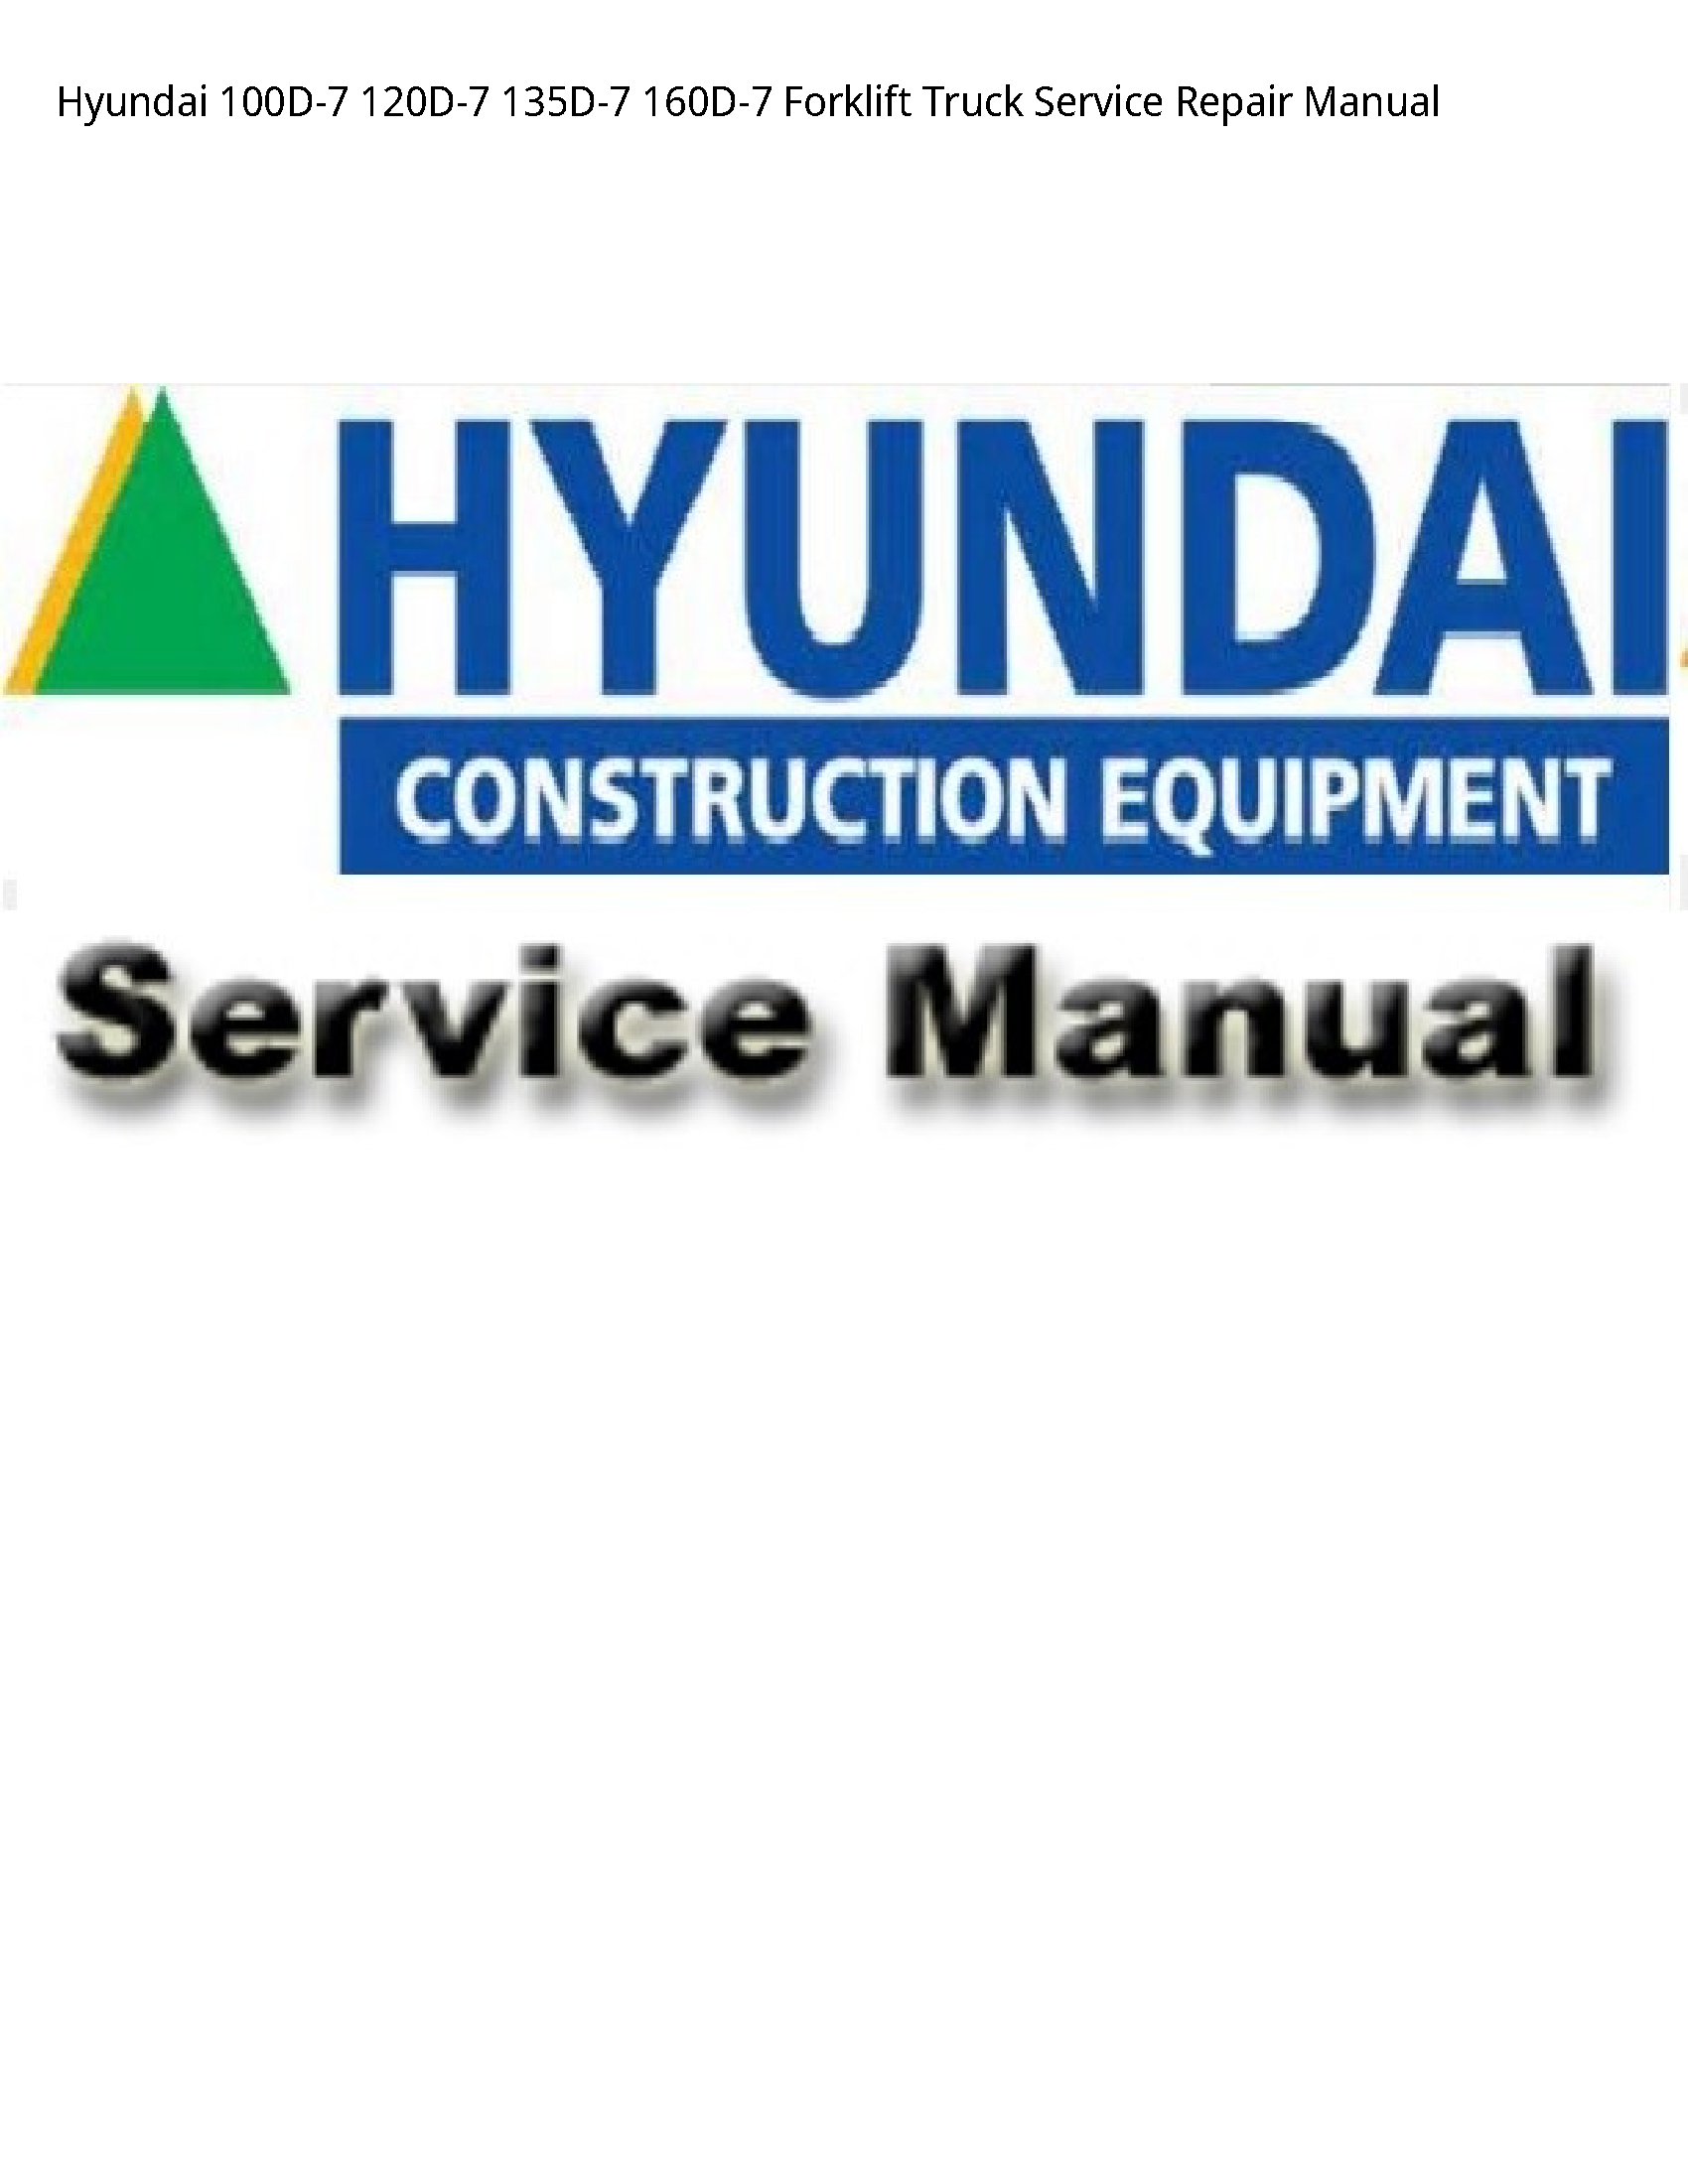 Hyundai 100D-7 Forklift Truck manual